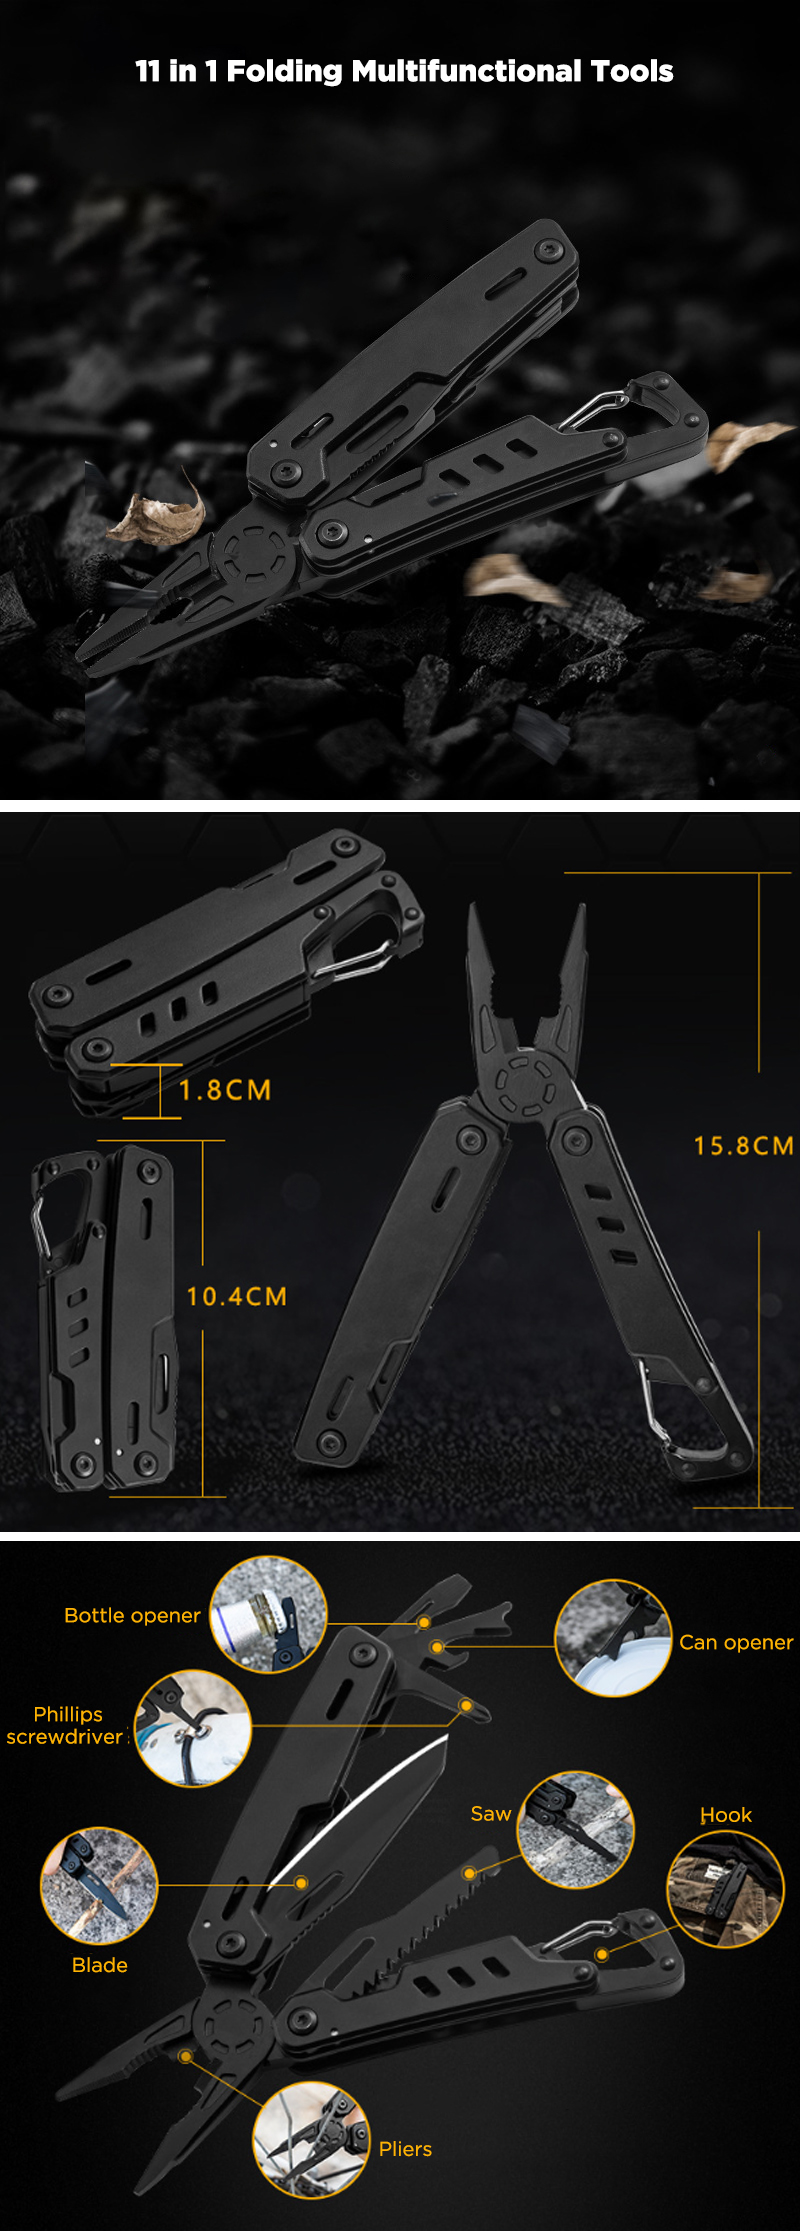 VOLKEN-11-in-1-Multifunctional-Pliers-Portable-Outdoor-Hikibg-EDC-Folding-Knife-Tool-1598634-1